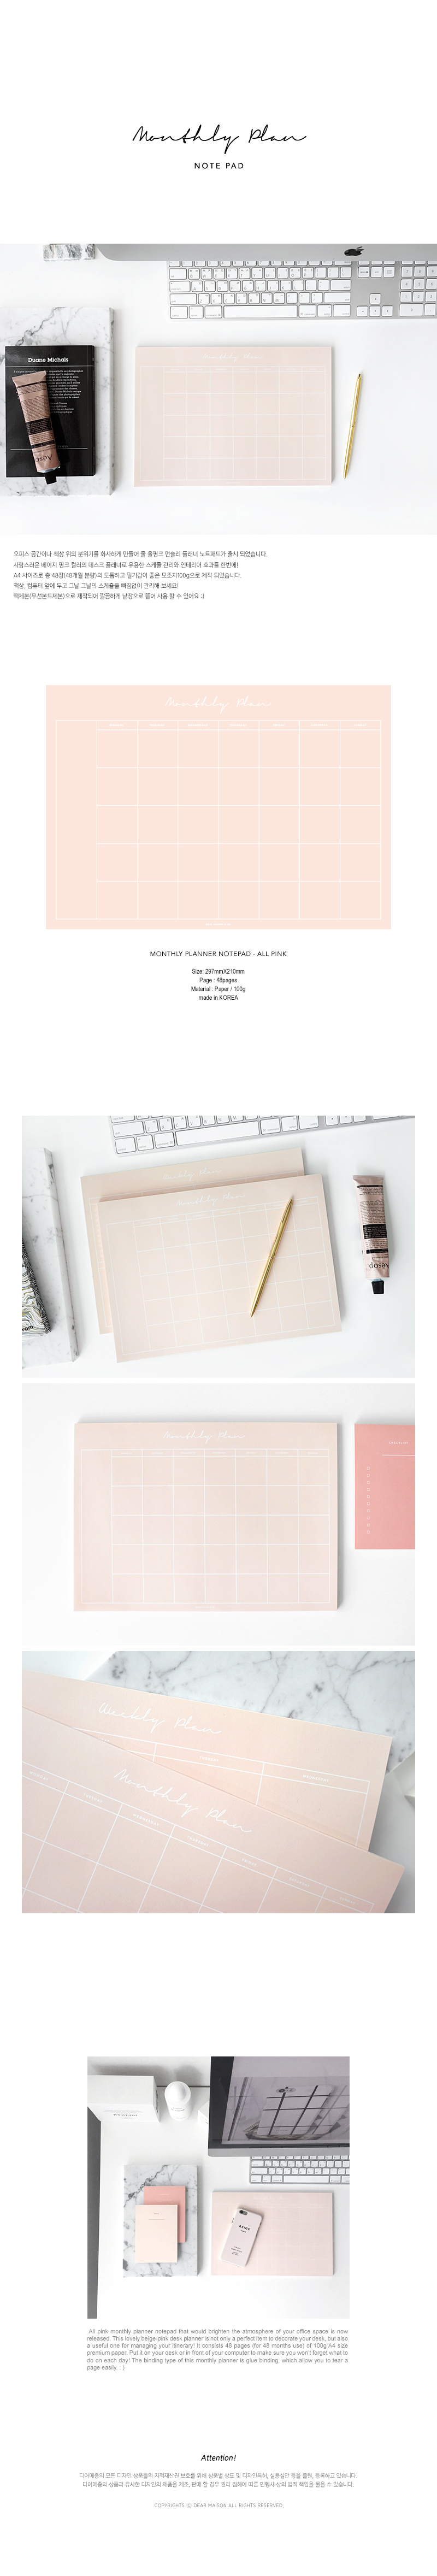 Monthly Planner Notepad - All Pink 8,000원 - 디어메종 디자인문구, 노트/메모, 메모지, 메모패드 바보사랑 Monthly Planner Notepad - All Pink 8,000원 - 디어메종 디자인문구, 노트/메모, 메모지, 메모패드 바보사랑